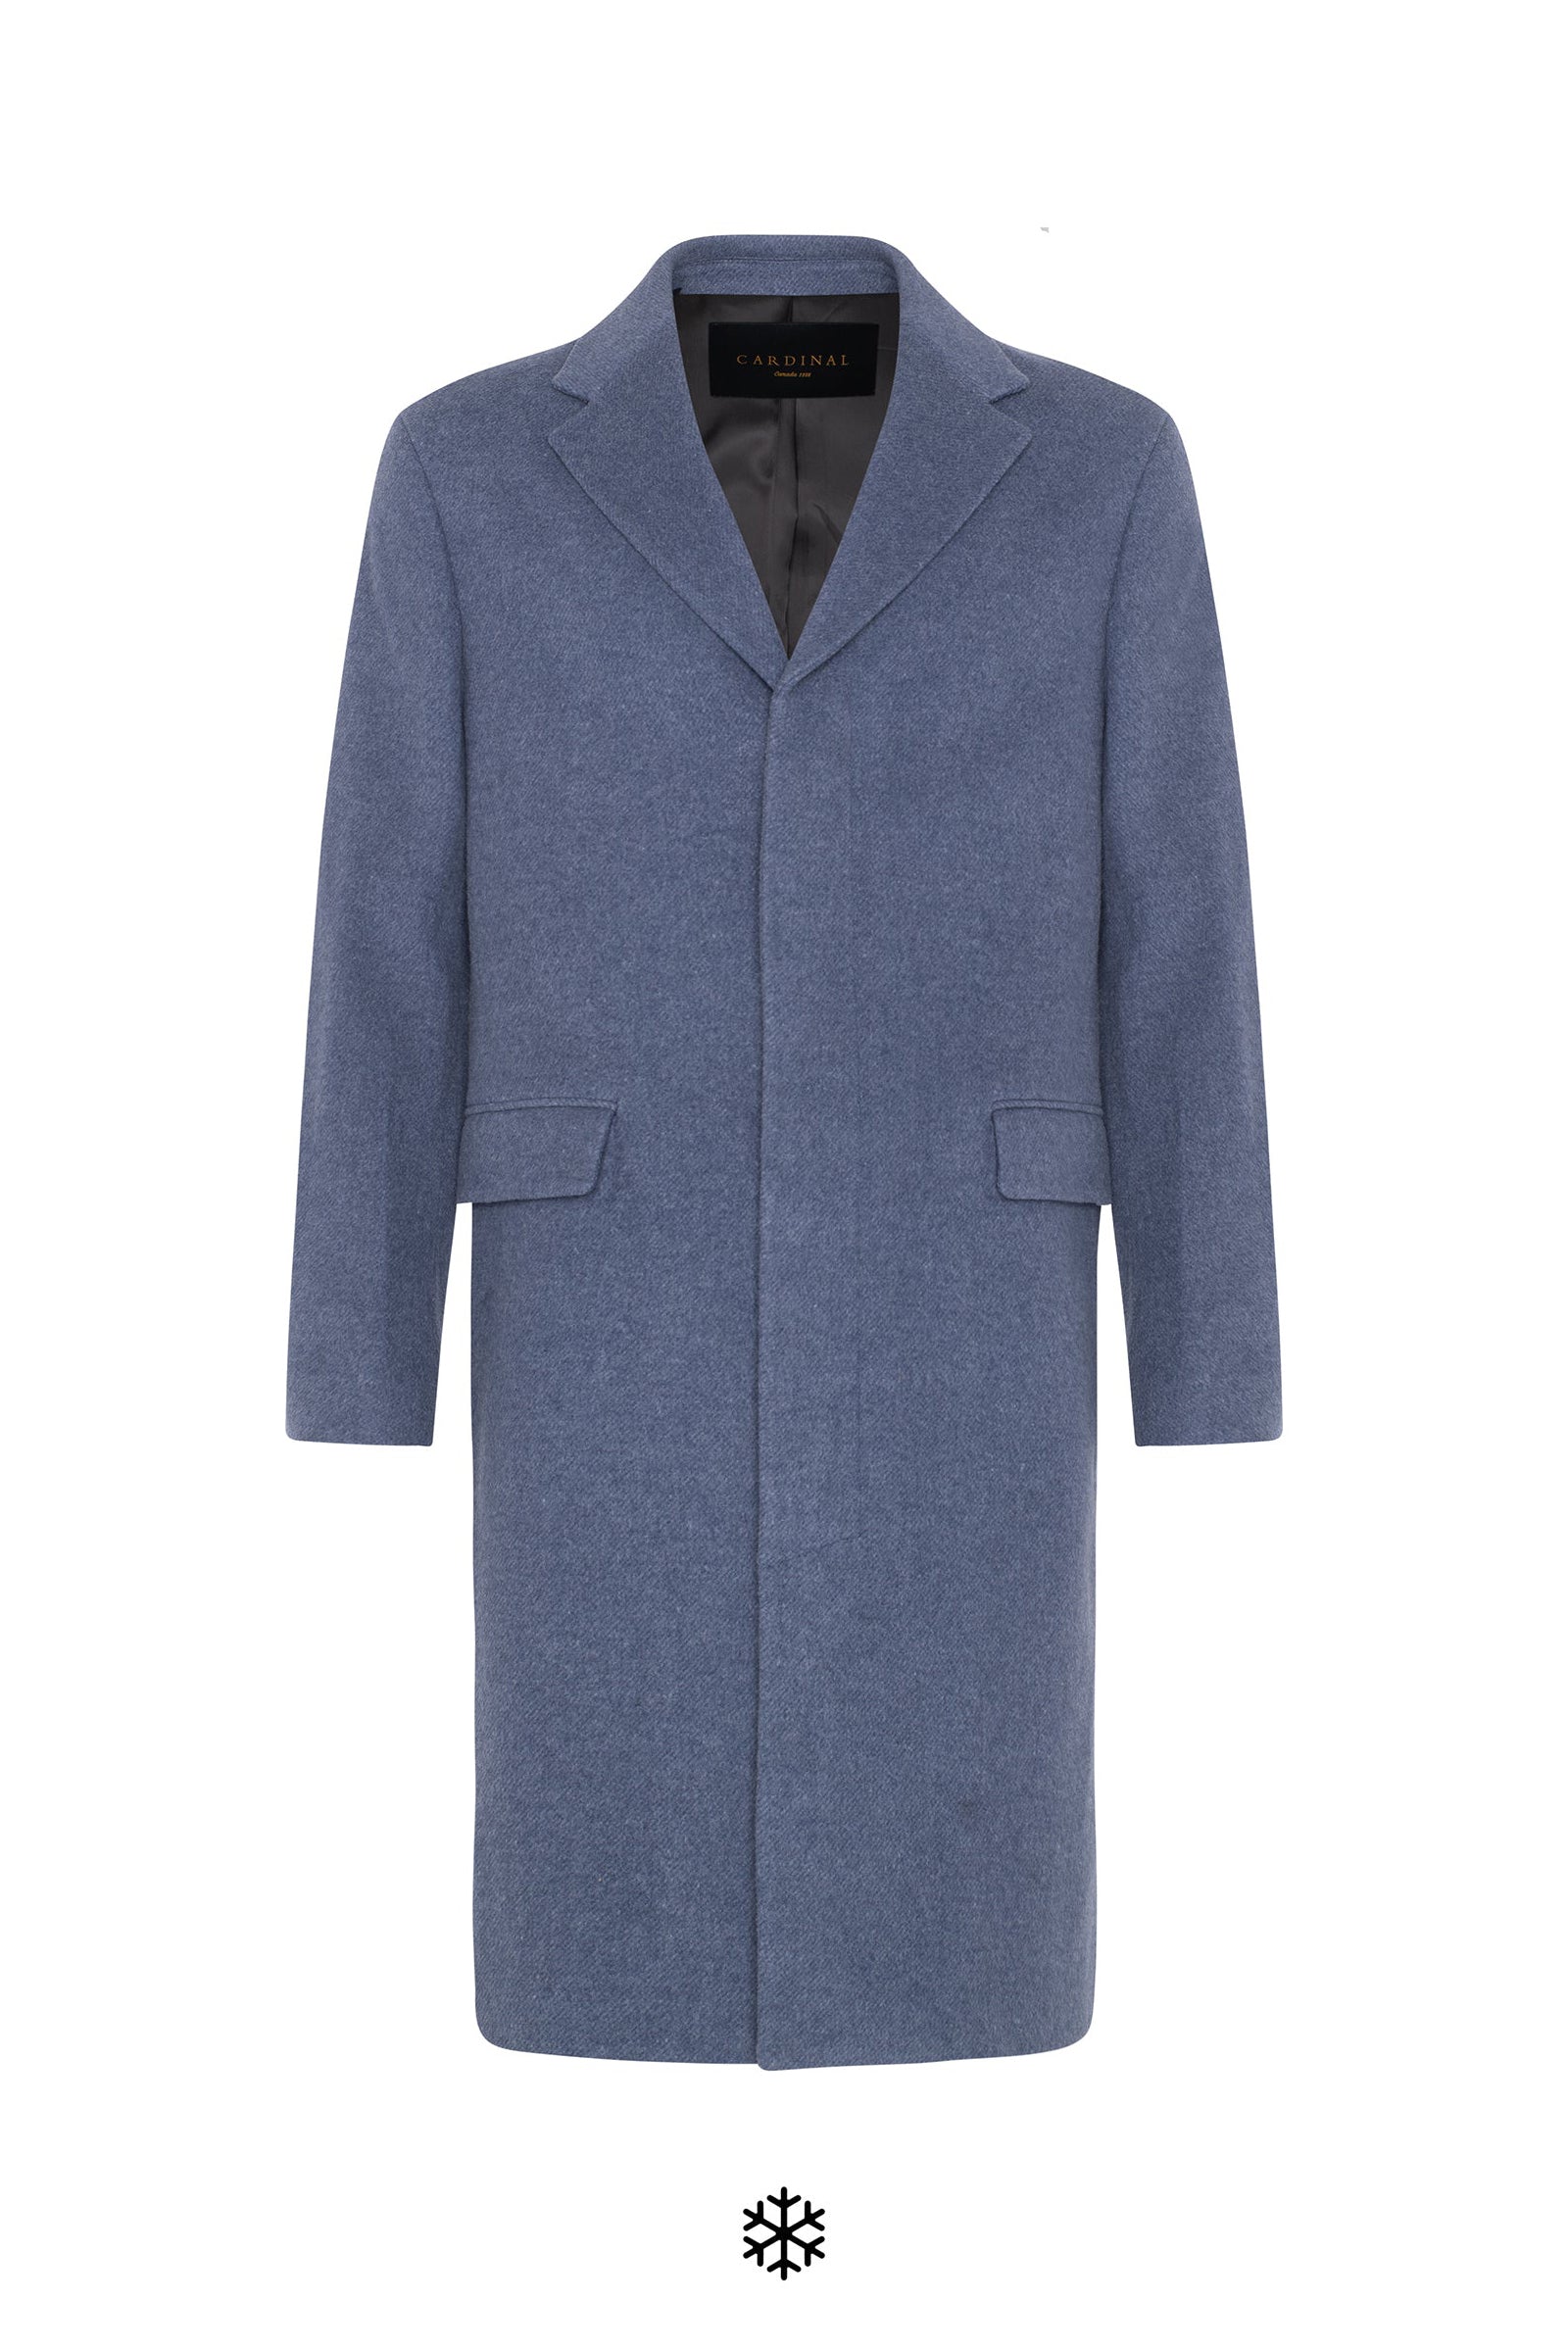 Mercer - blue wool blend topcoat 41.5 inch length